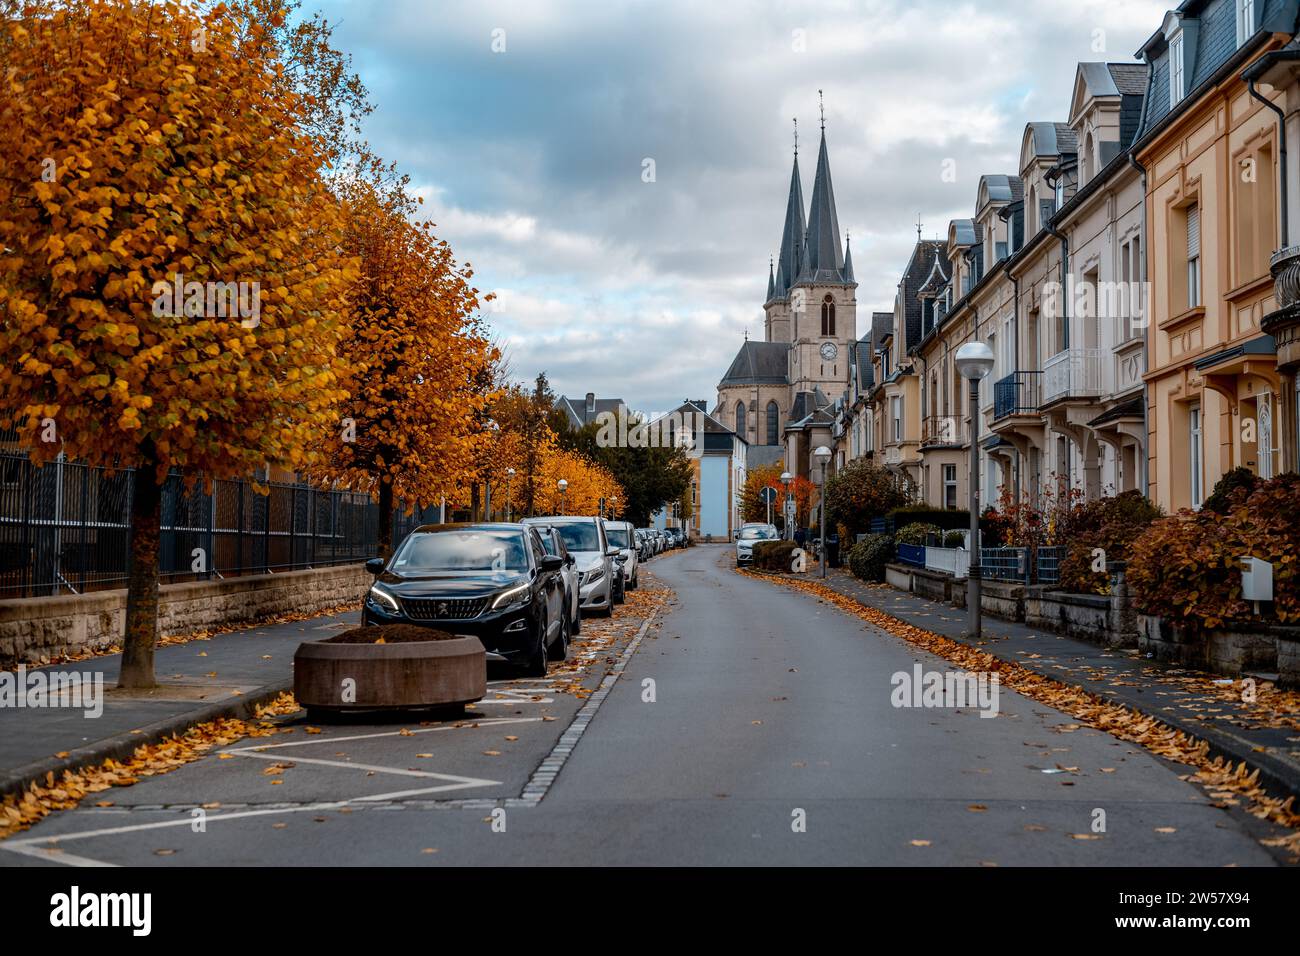 Autumn street walking - city of Esch/Alzette - Luxembourg Stock Photo